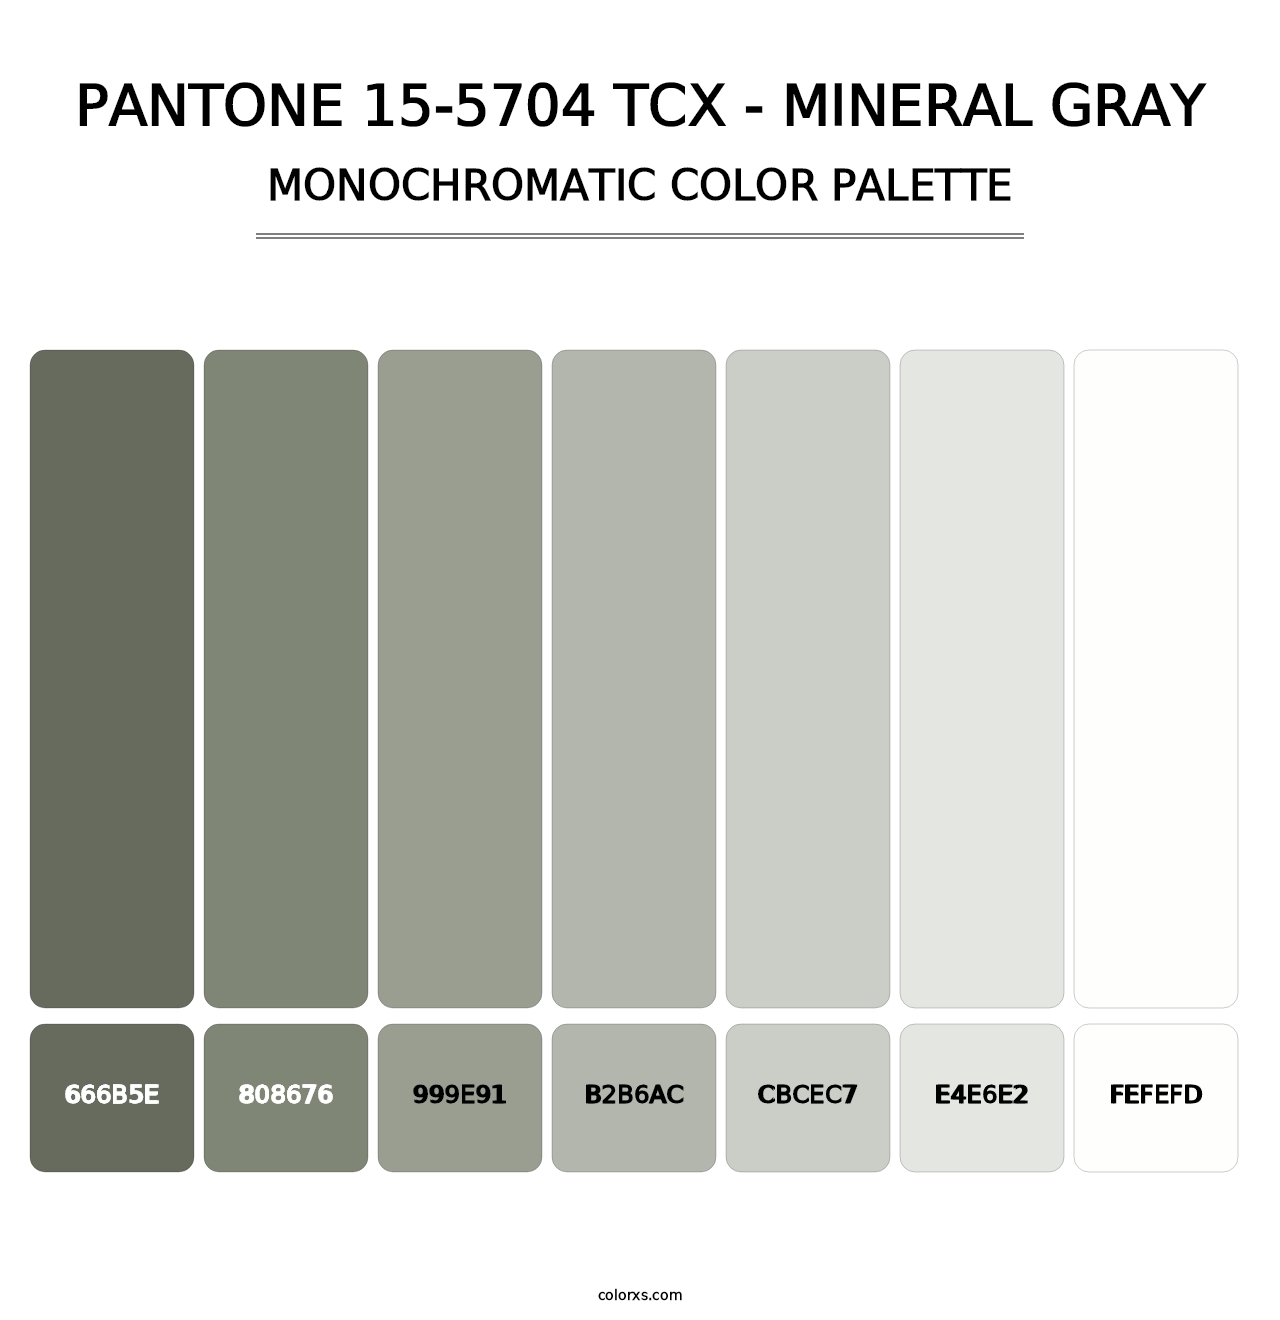 PANTONE 15-5704 TCX - Mineral Gray - Monochromatic Color Palette